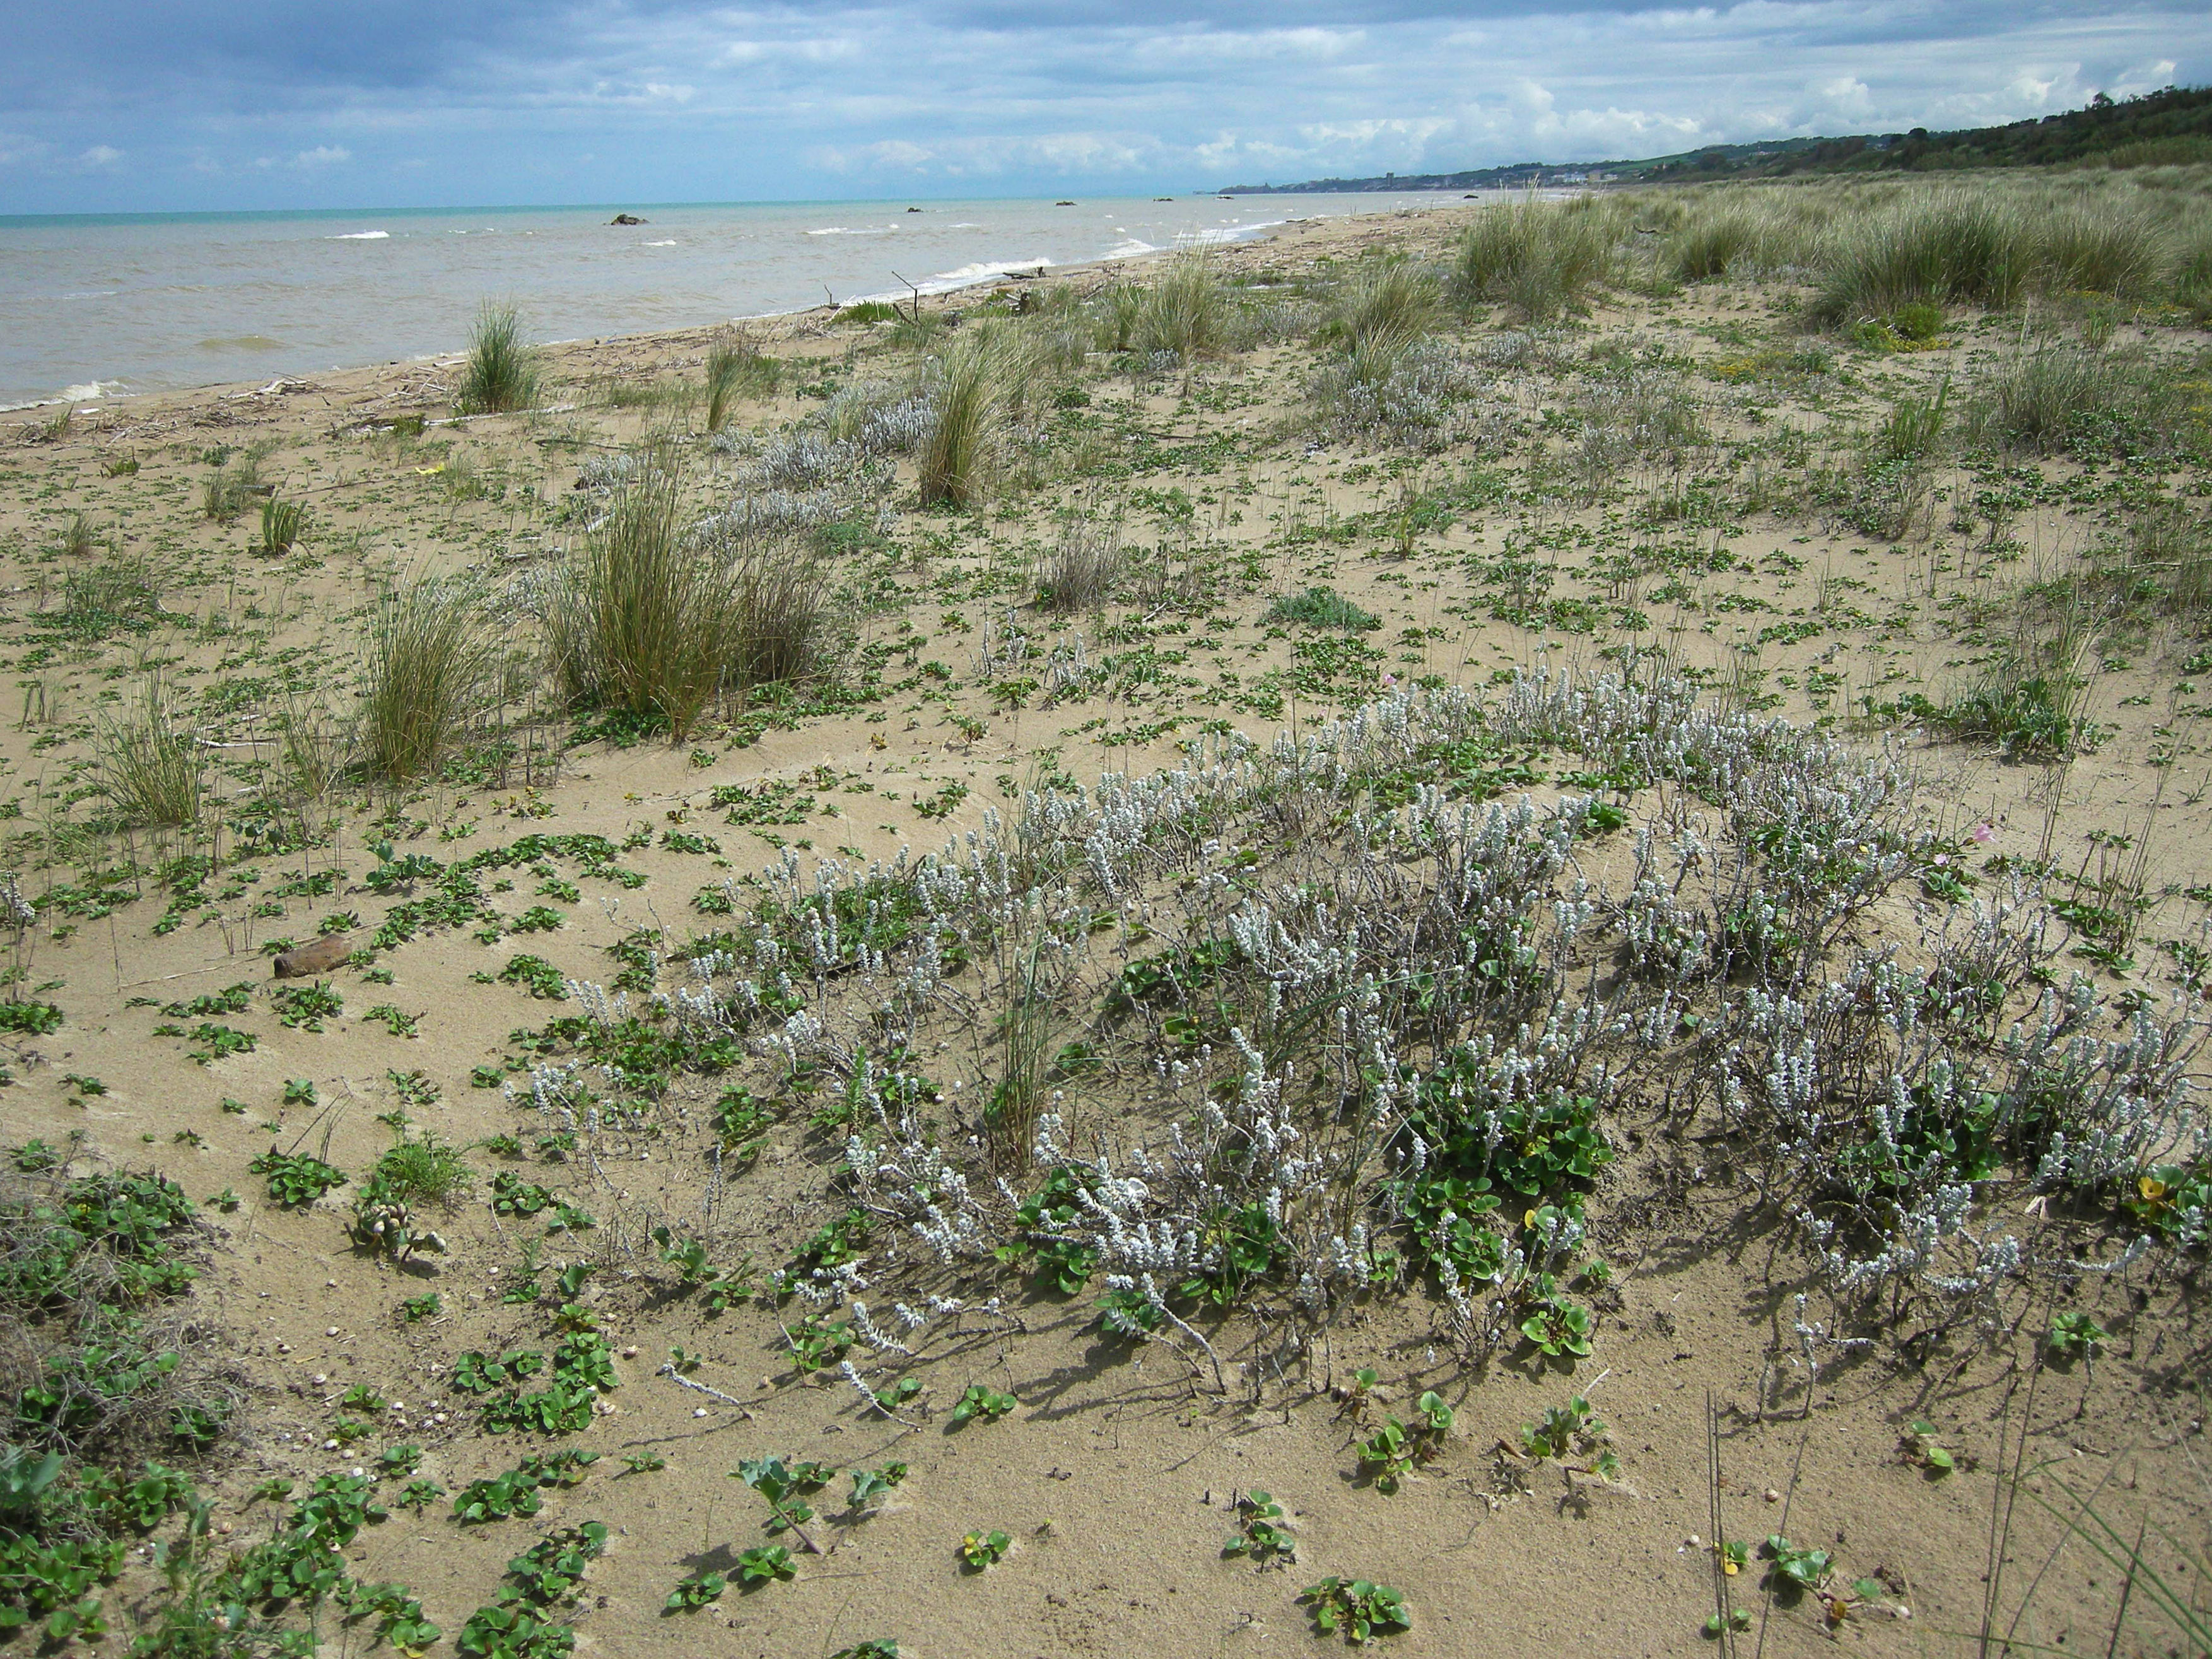 Embryonic shifting dunes (EU Habitats 2110 and 2120) characterizing the Foce Trigno-Marina di Petacciato eLTER Site. Species in the image: Elymus farctus, Ammophila arenaria, Achillea maritima, Calystegia soldanella.